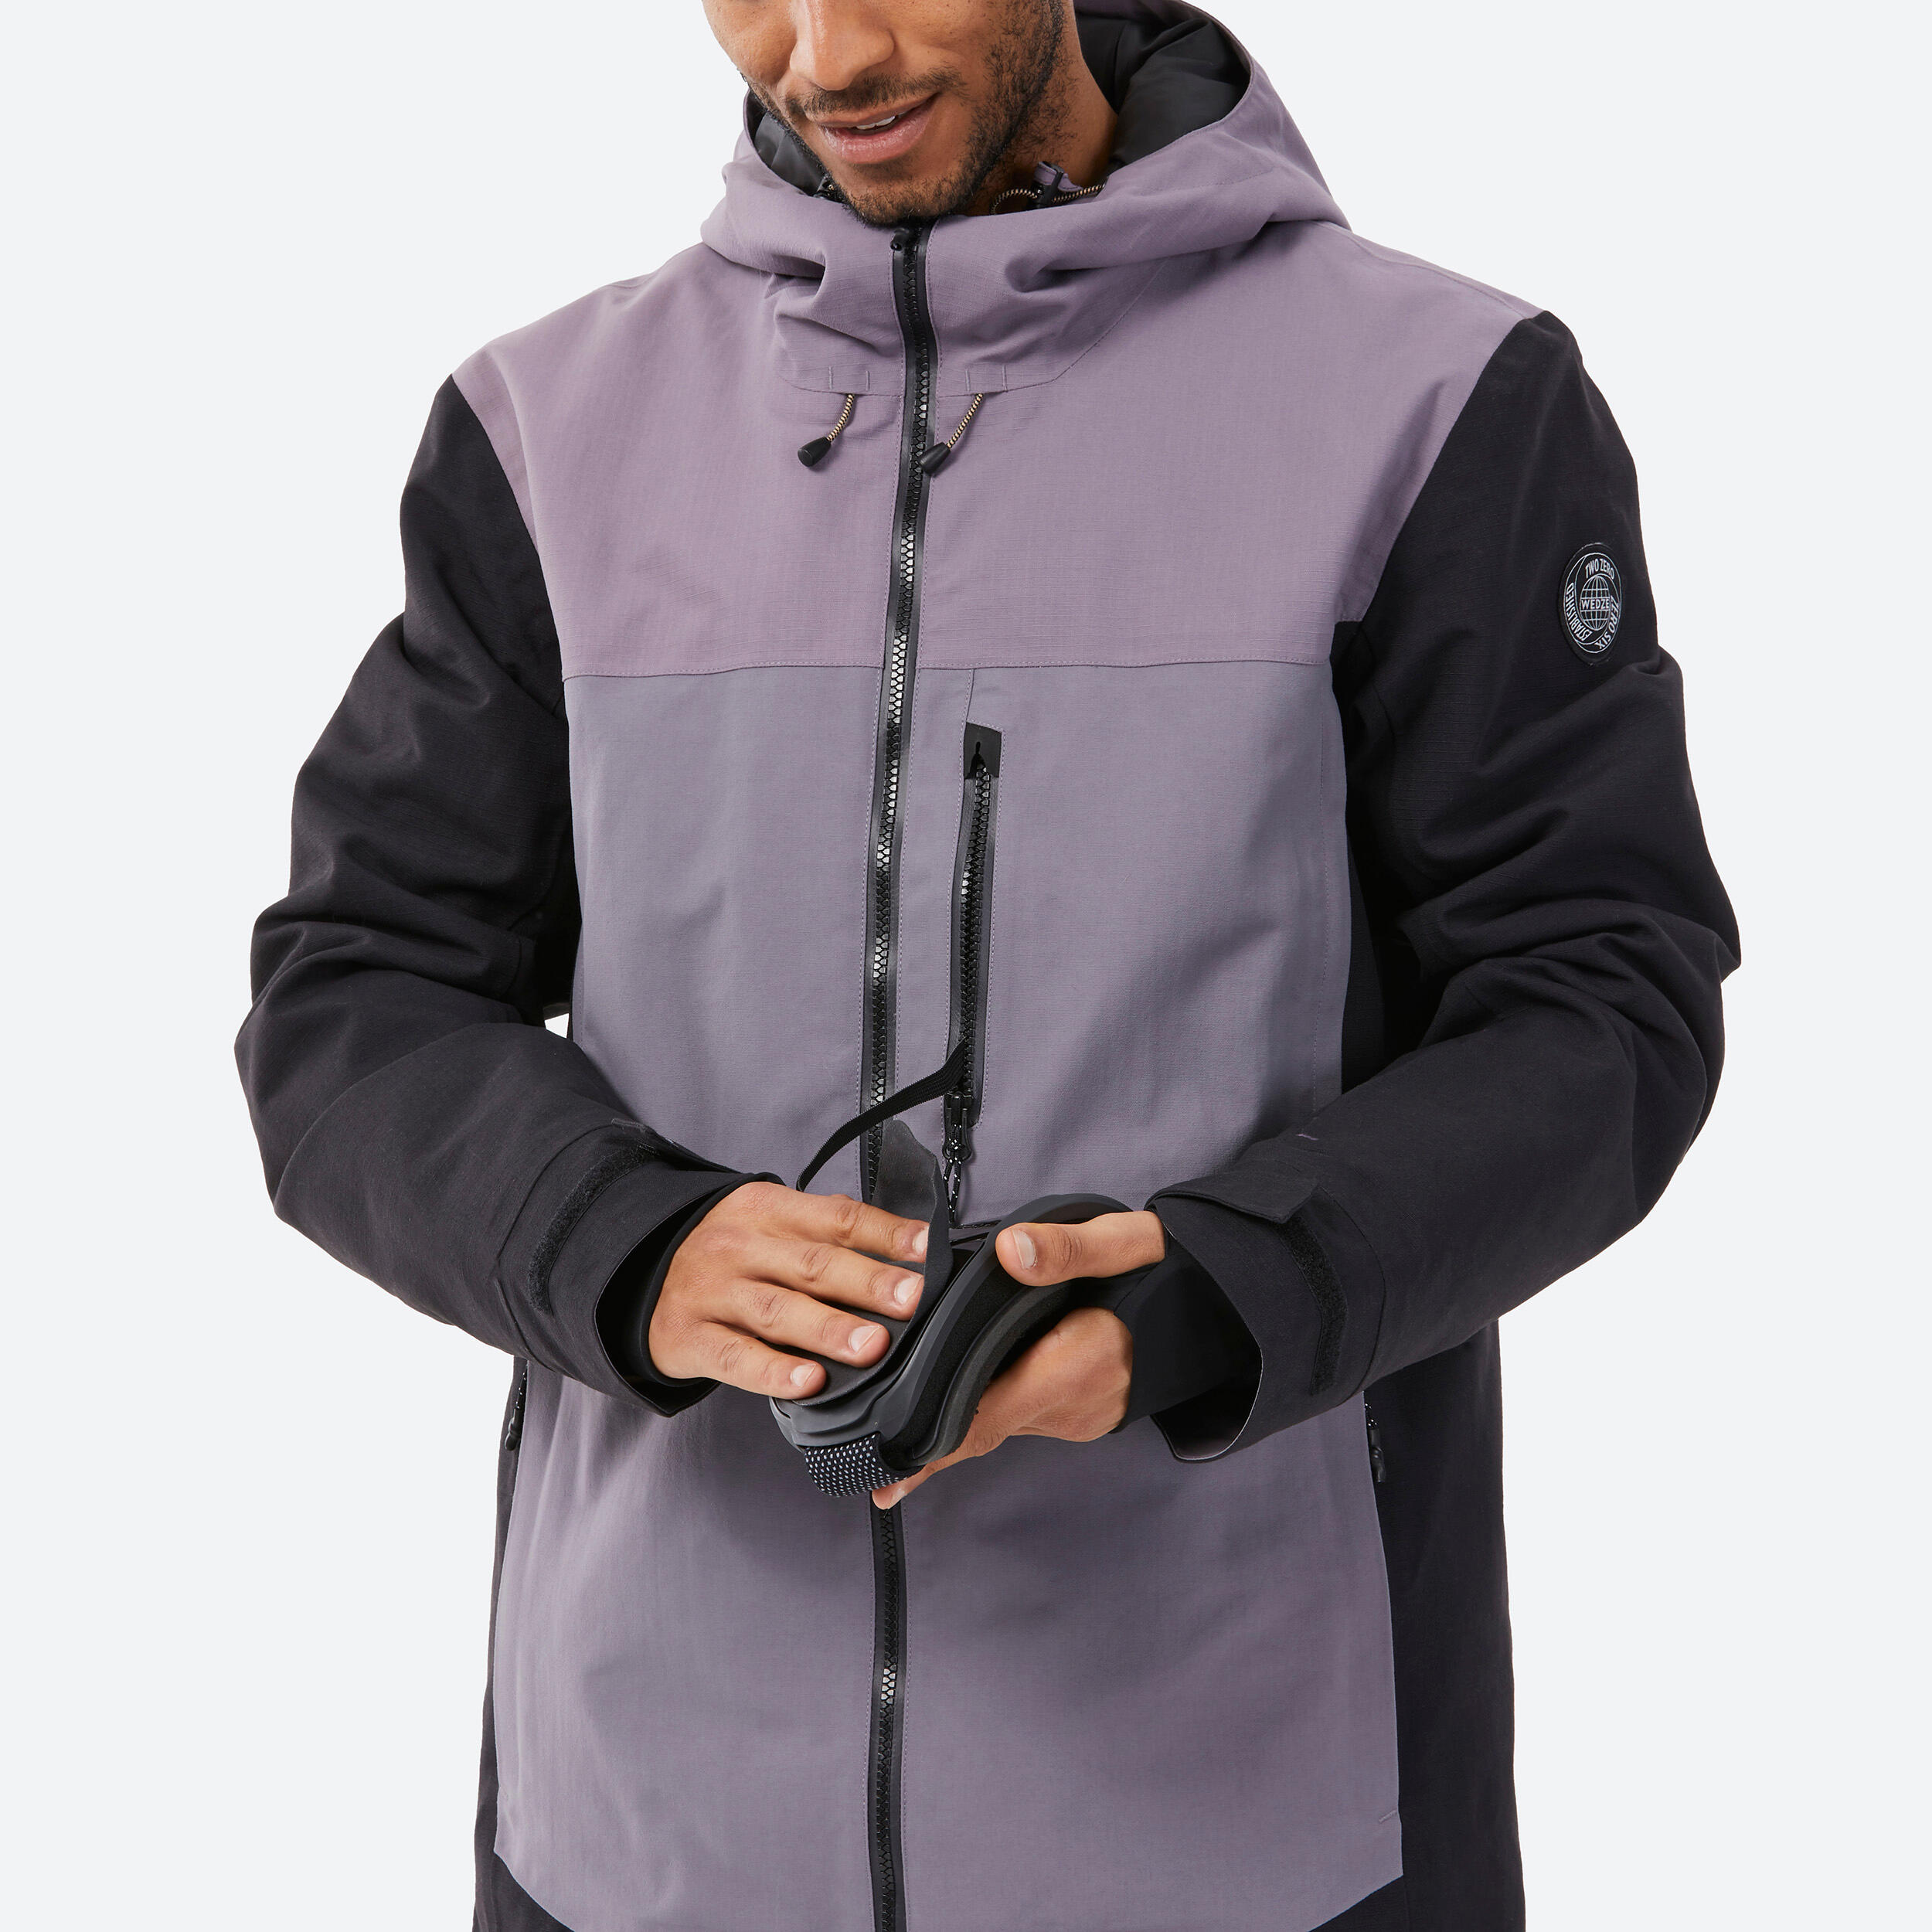 Men's snowboard jacket compatible with ZIPROTEC - SNB 500 - Purple 10/17